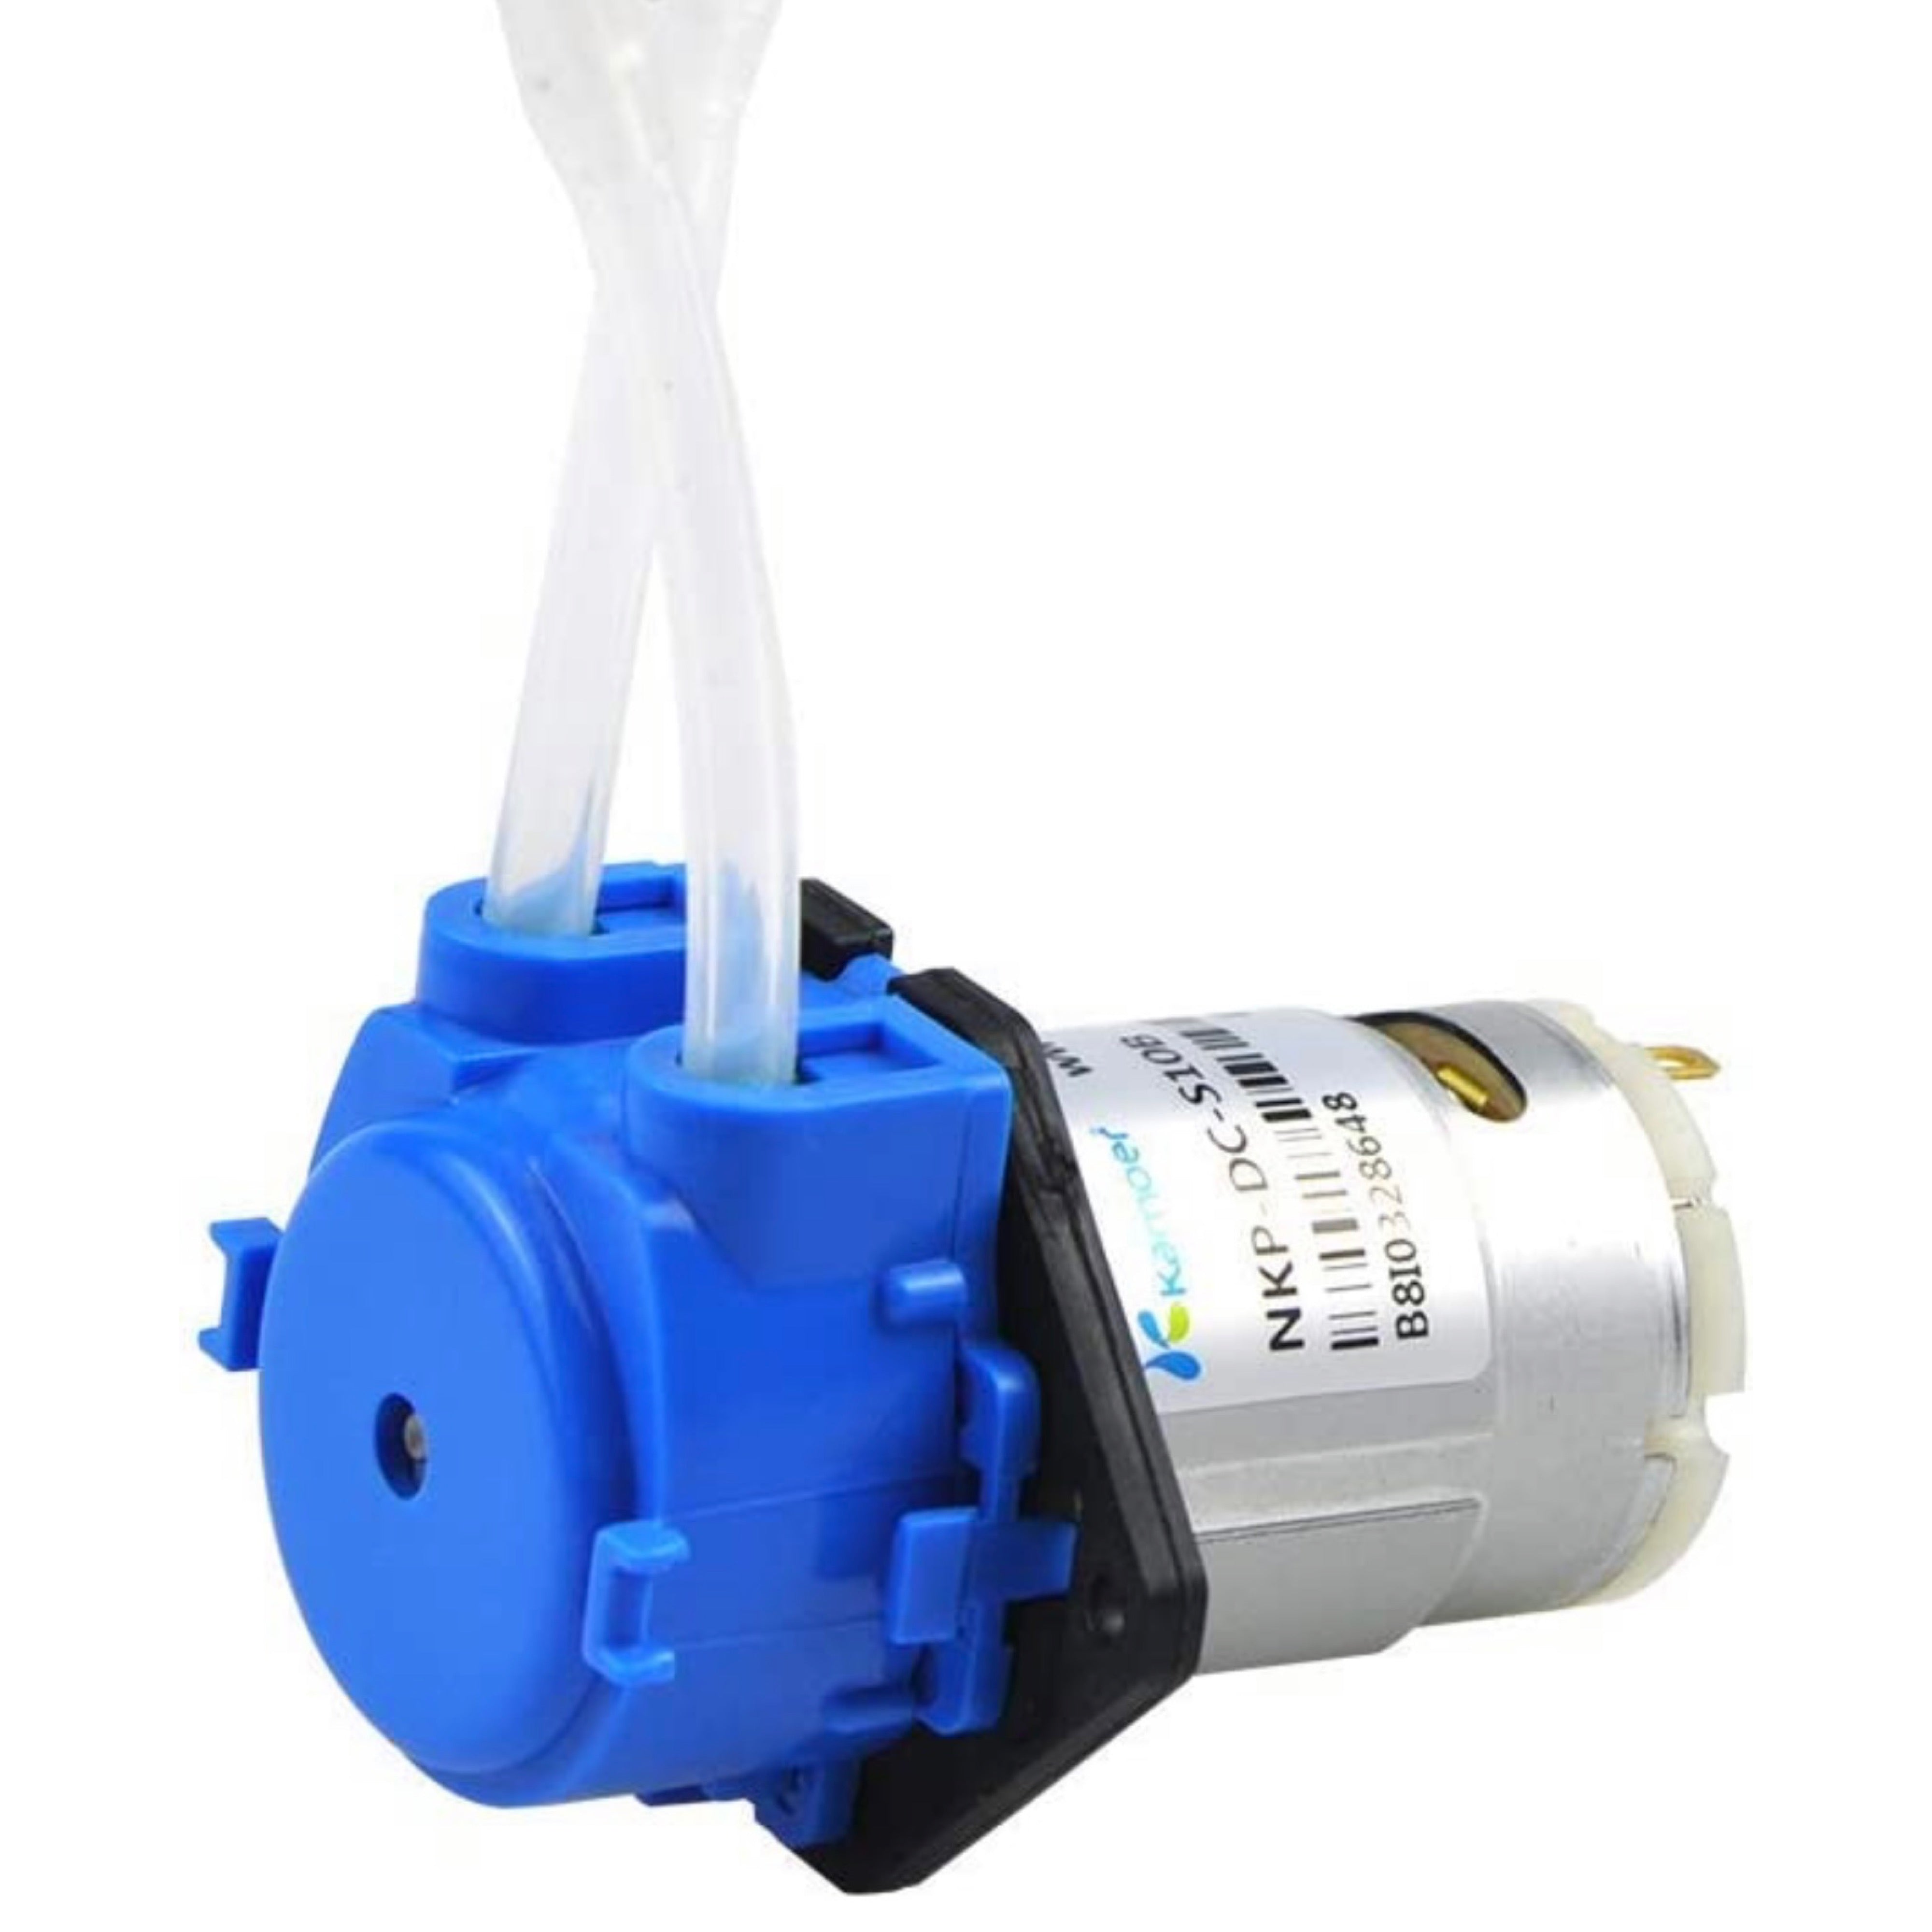 White Ink Circulation Pump for Knight 12™ DTF Printer or Similar Dual Heads - KingdomDTF.com